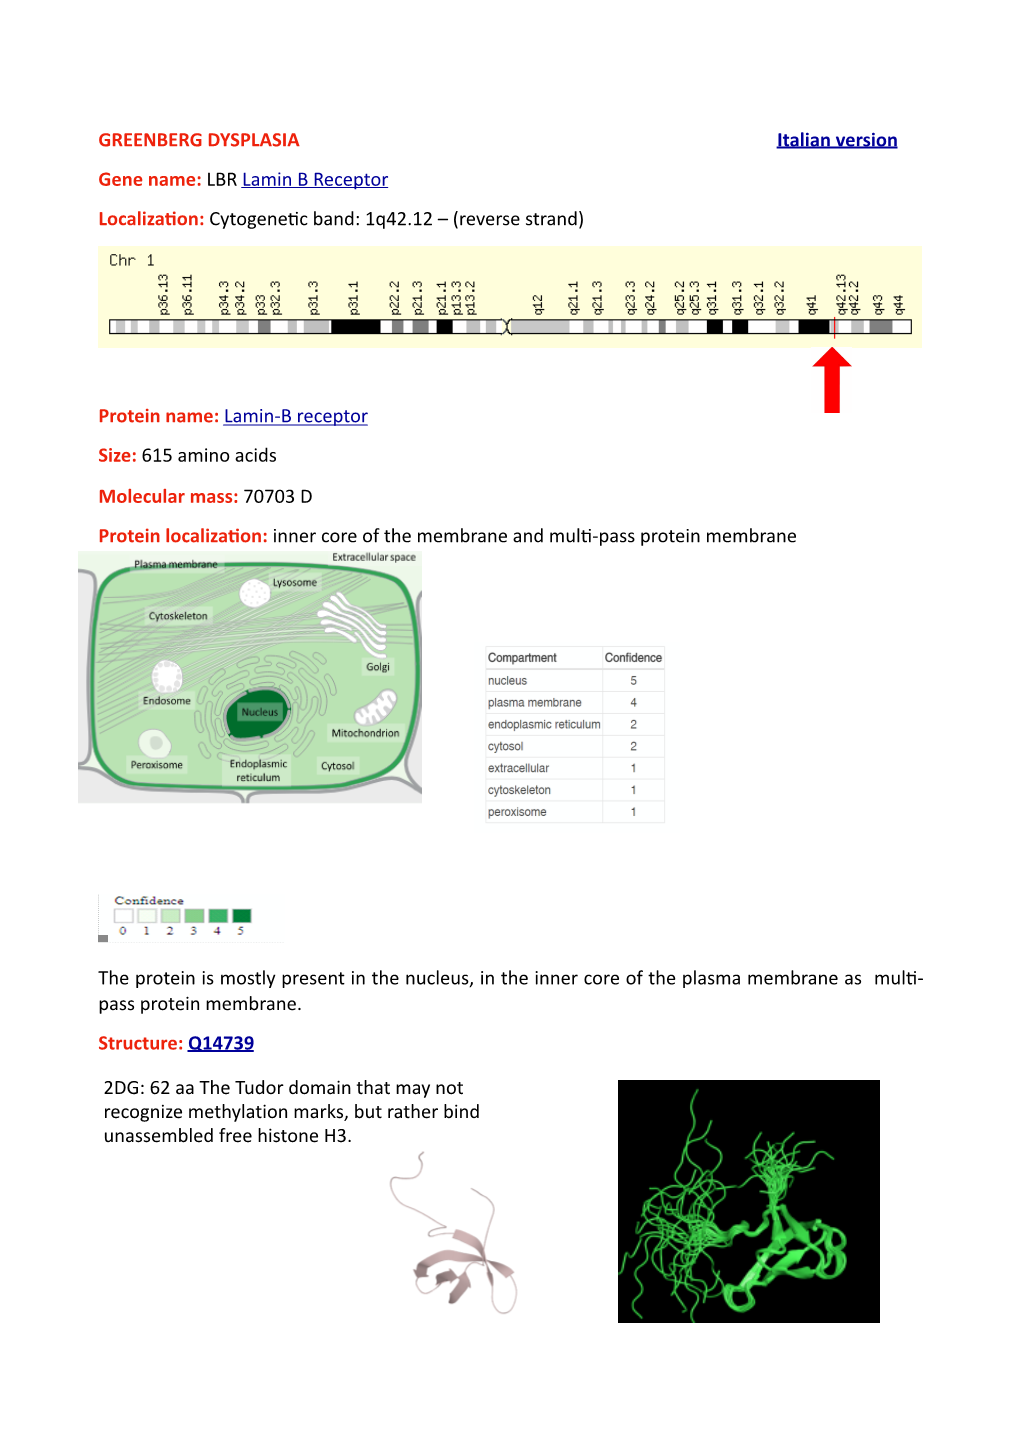 GREENBERG DYSPLASIA Italian Version Gene Name: LBR Lamin B Receptor Localiza On